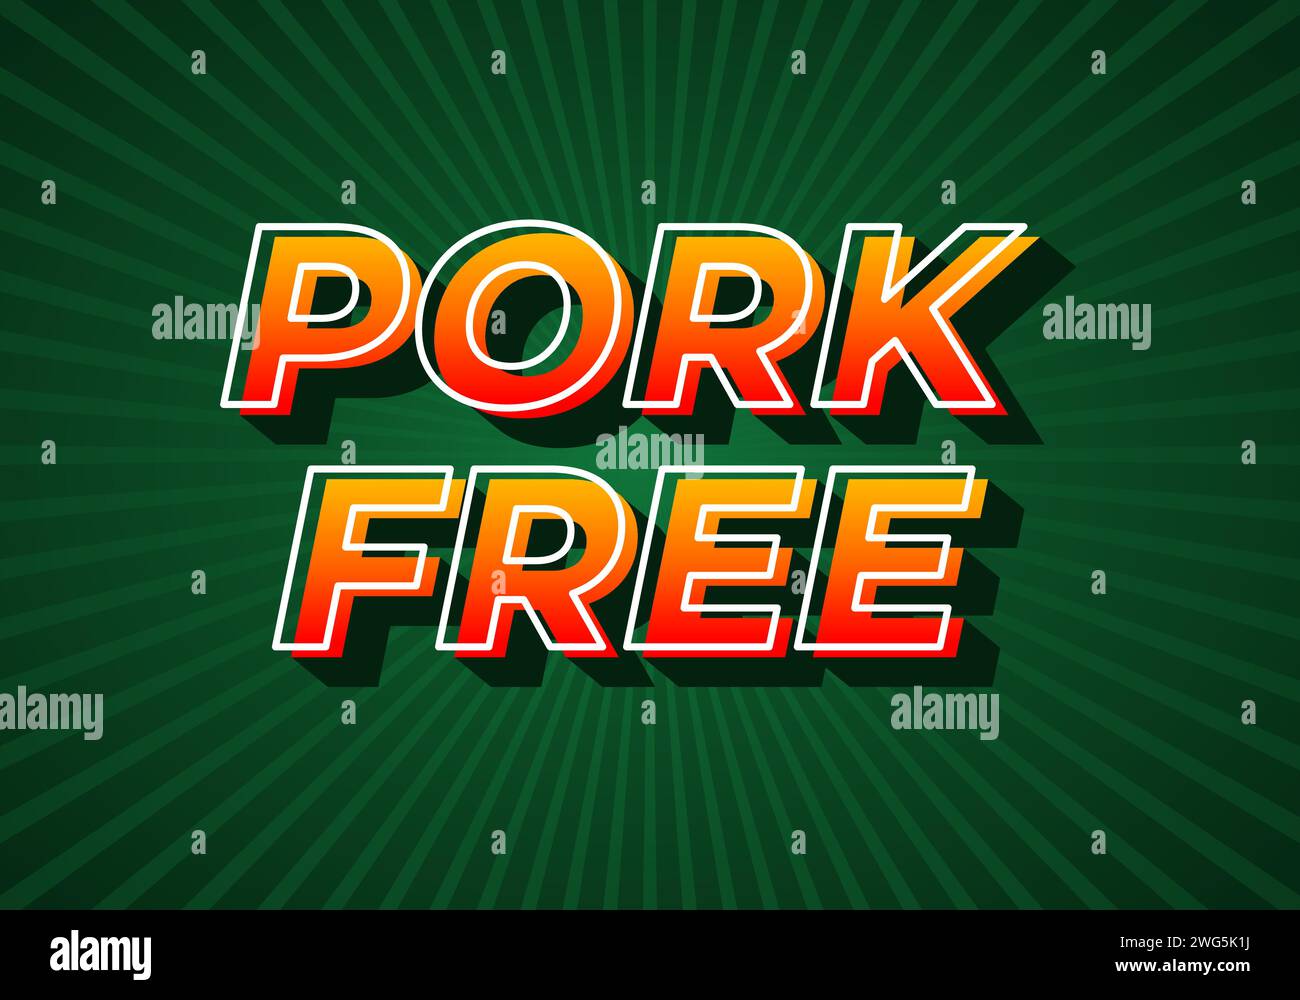 Pork free. Text effect design in gradient yellow red color. 3D look. dark green background Stock Vector